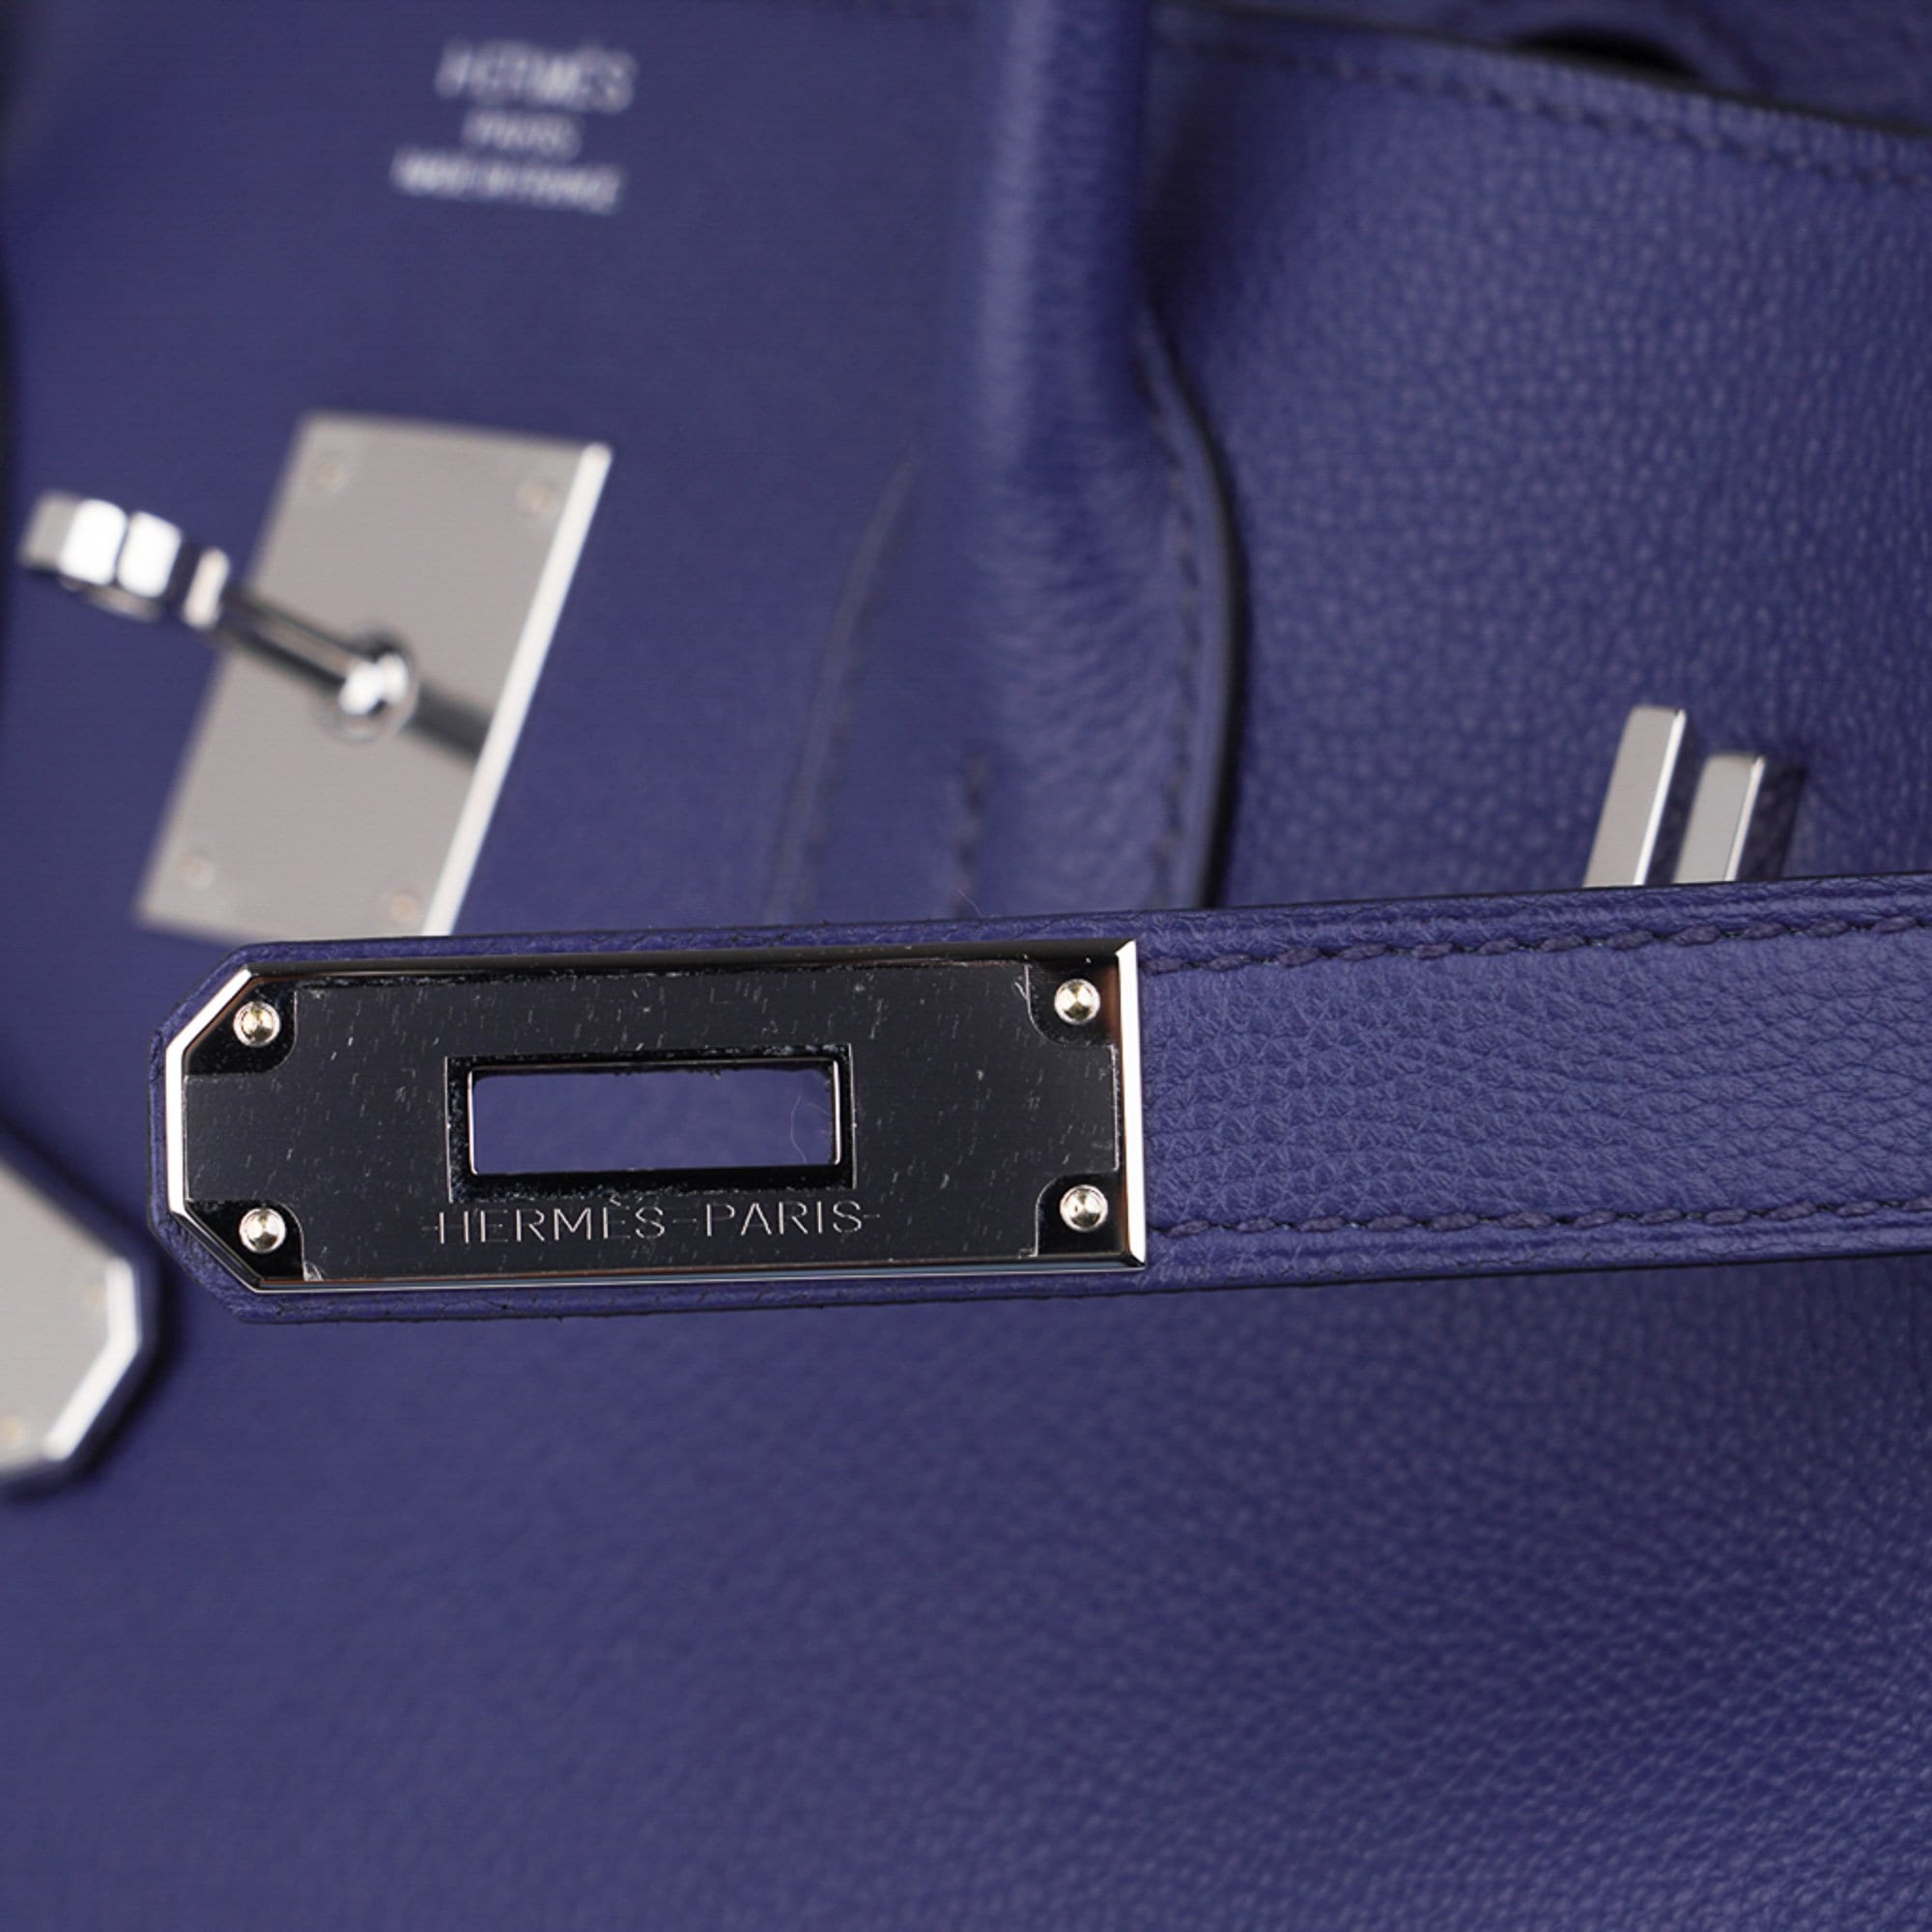 Sold at Auction: Hermes Birkin 35 Bag, Blue Sapphire Taurillon